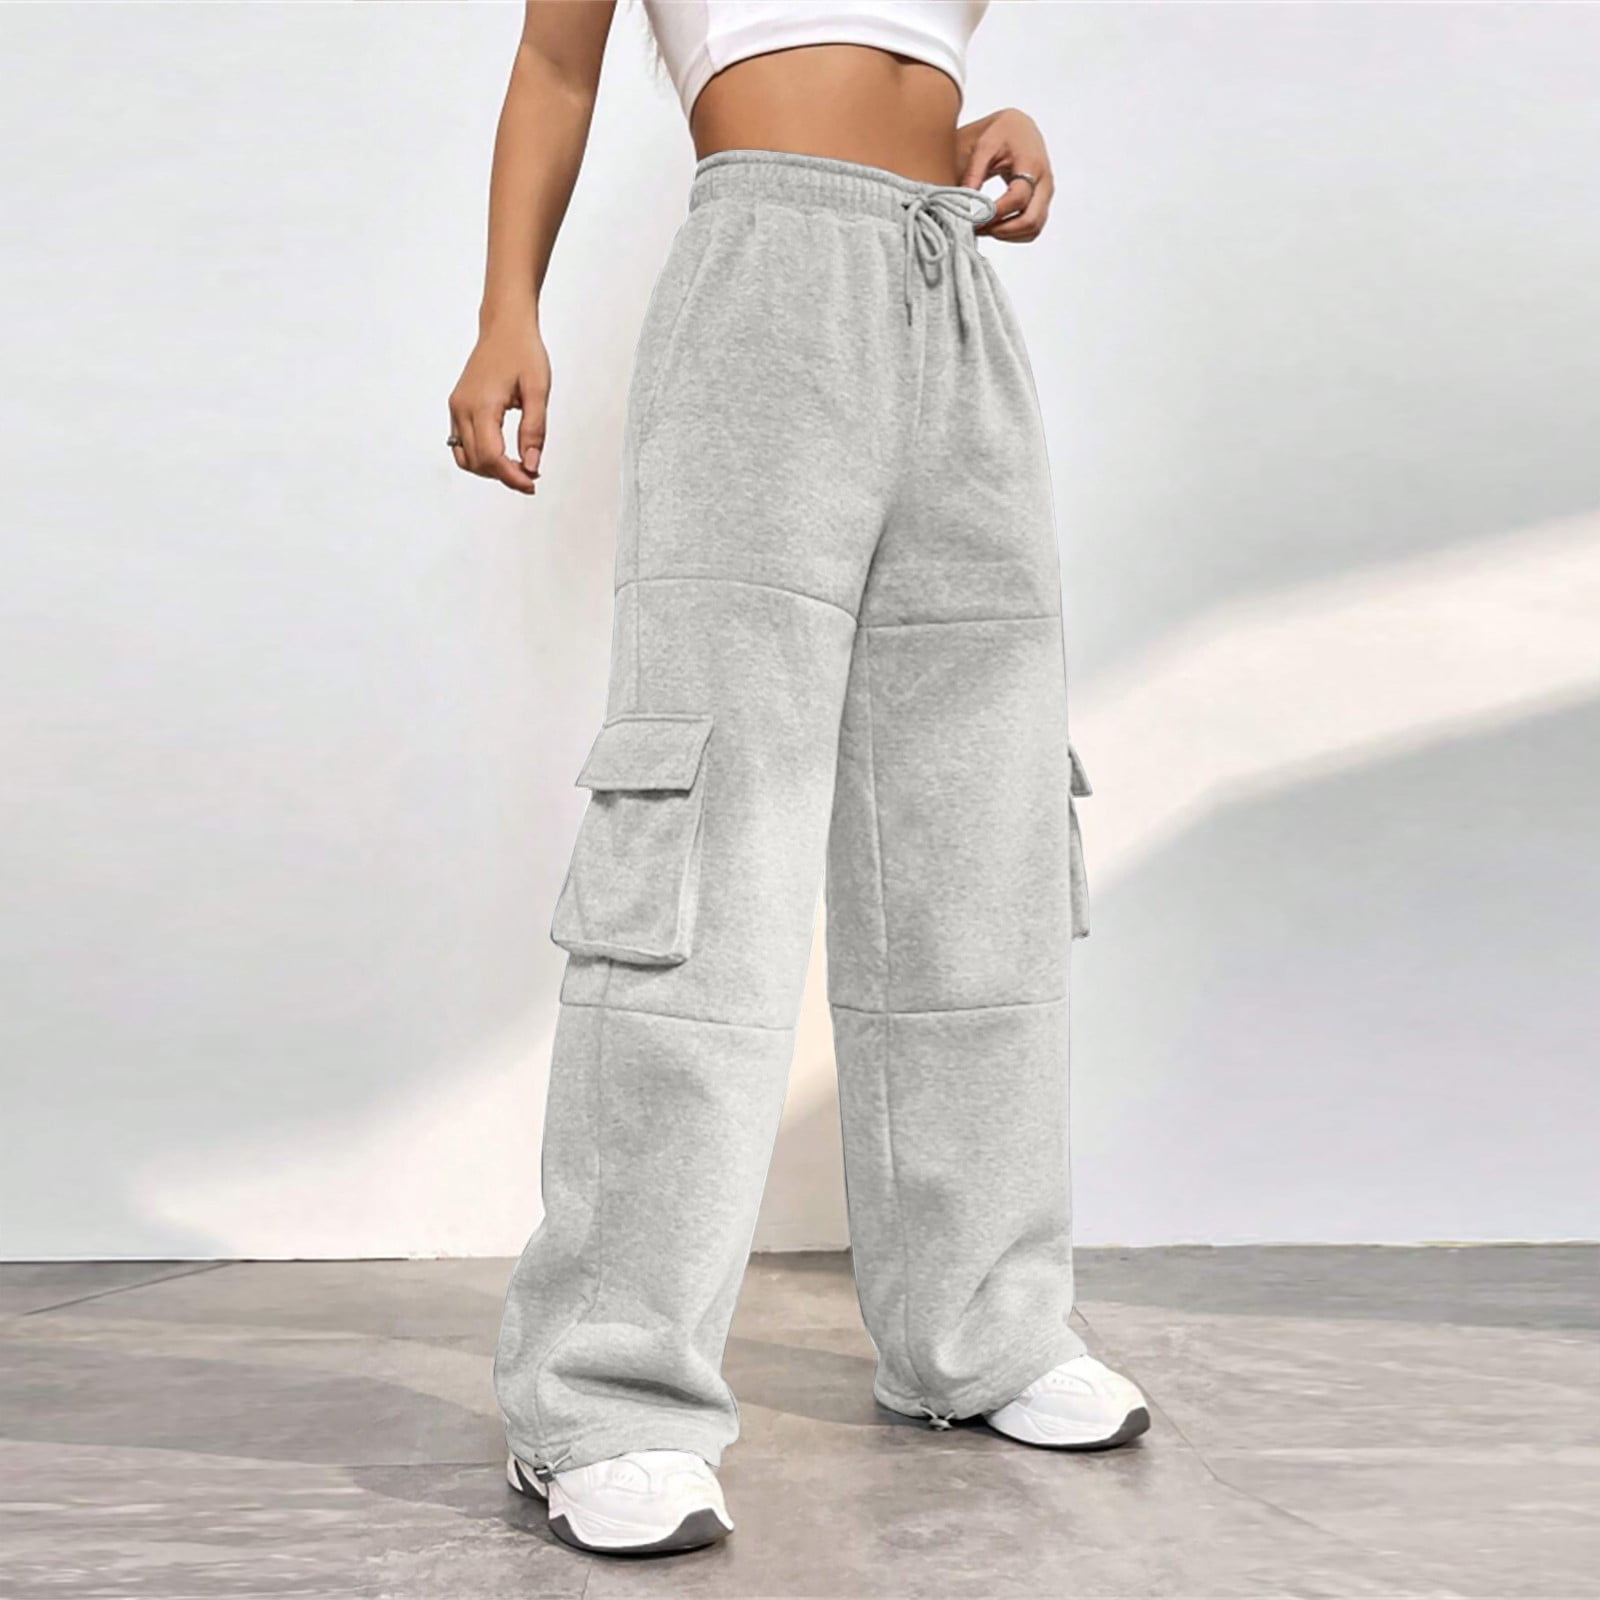 Women Light Grey Adjustable Drawstring Cuffs Joggers Casual Sweatpants